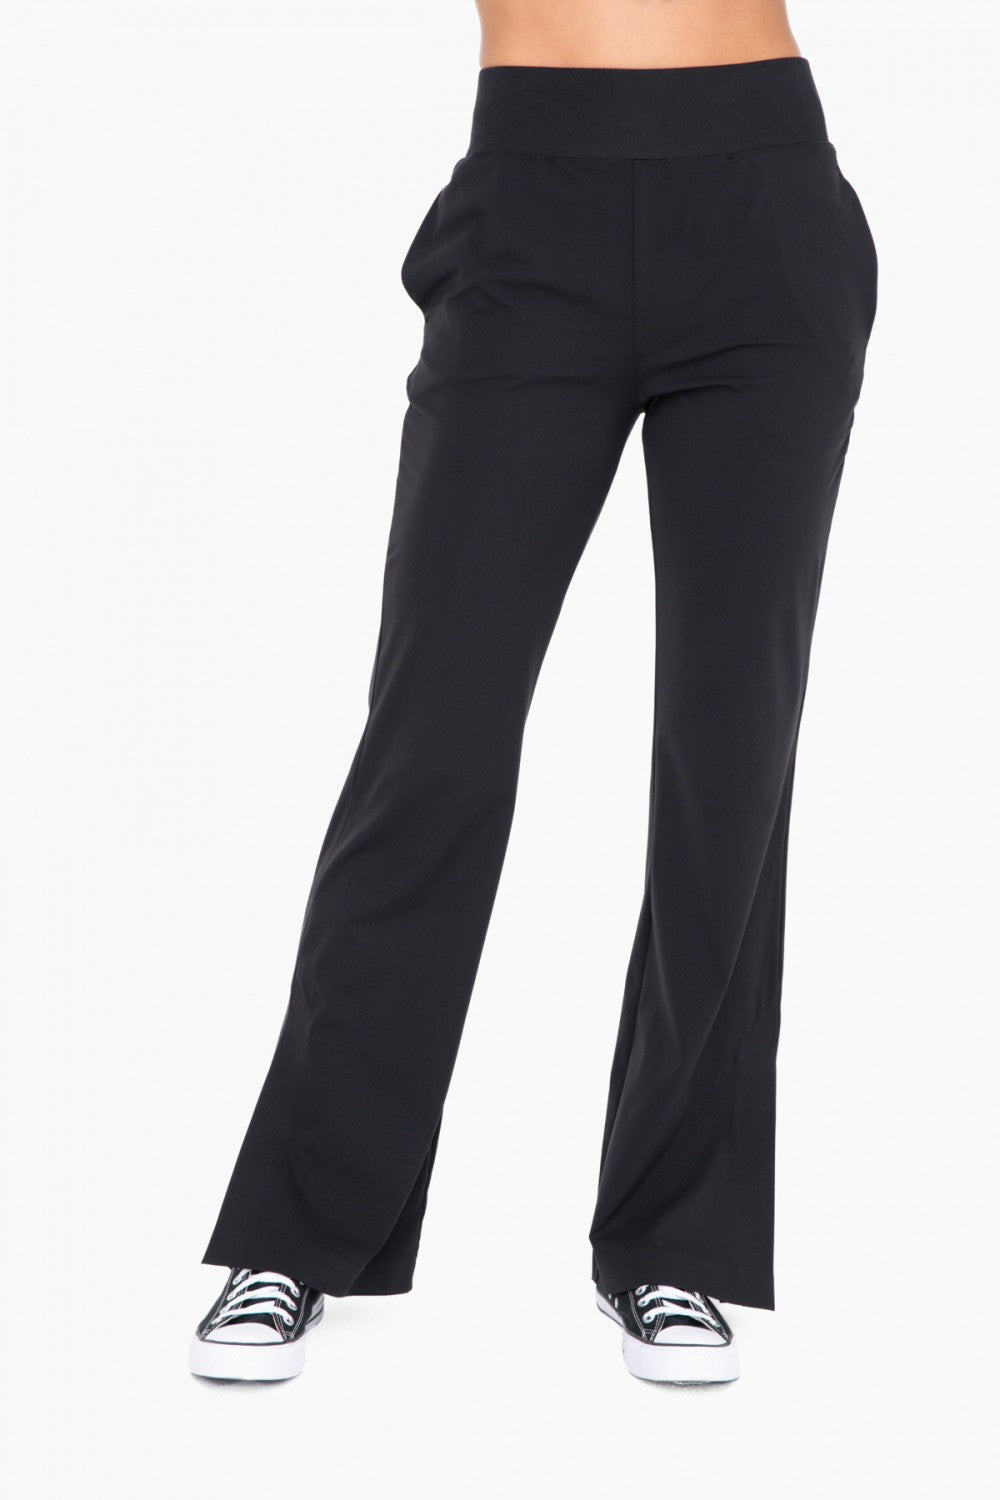 Mono b Black Active Pants Size XL - 47% off